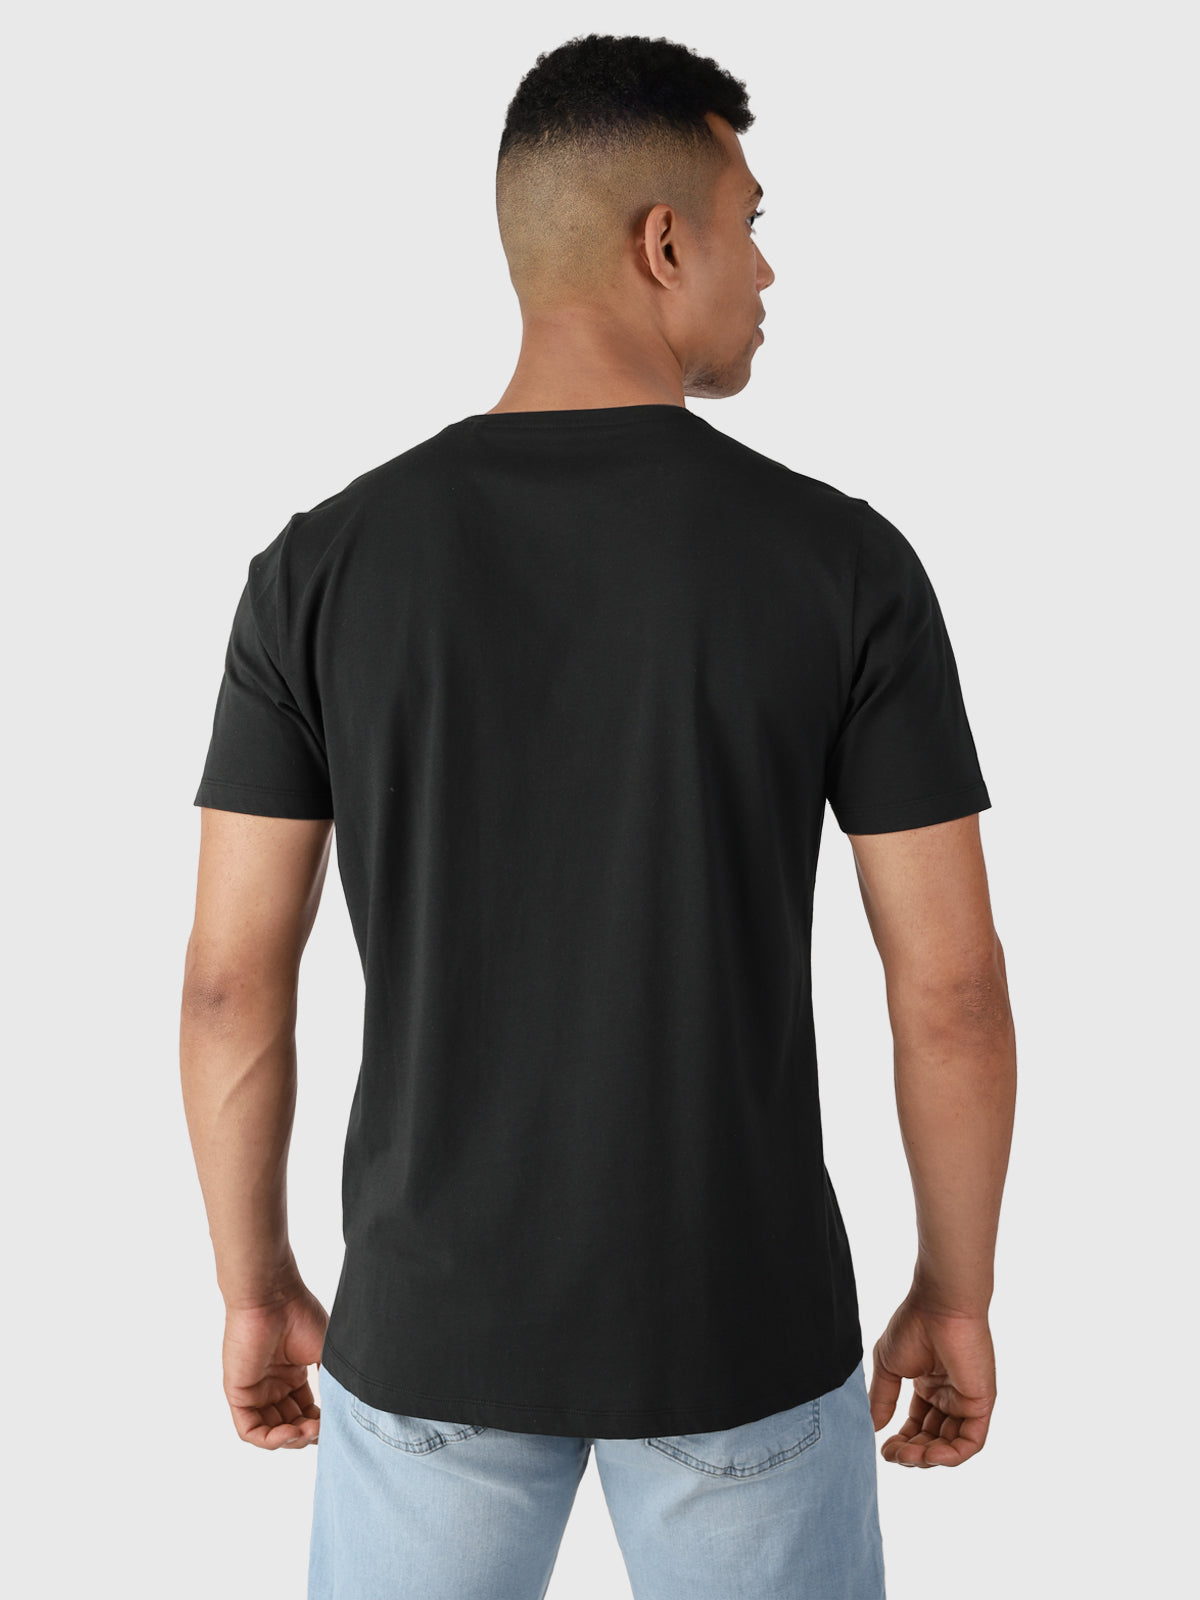 Naval-R Men T-Shirt | Black